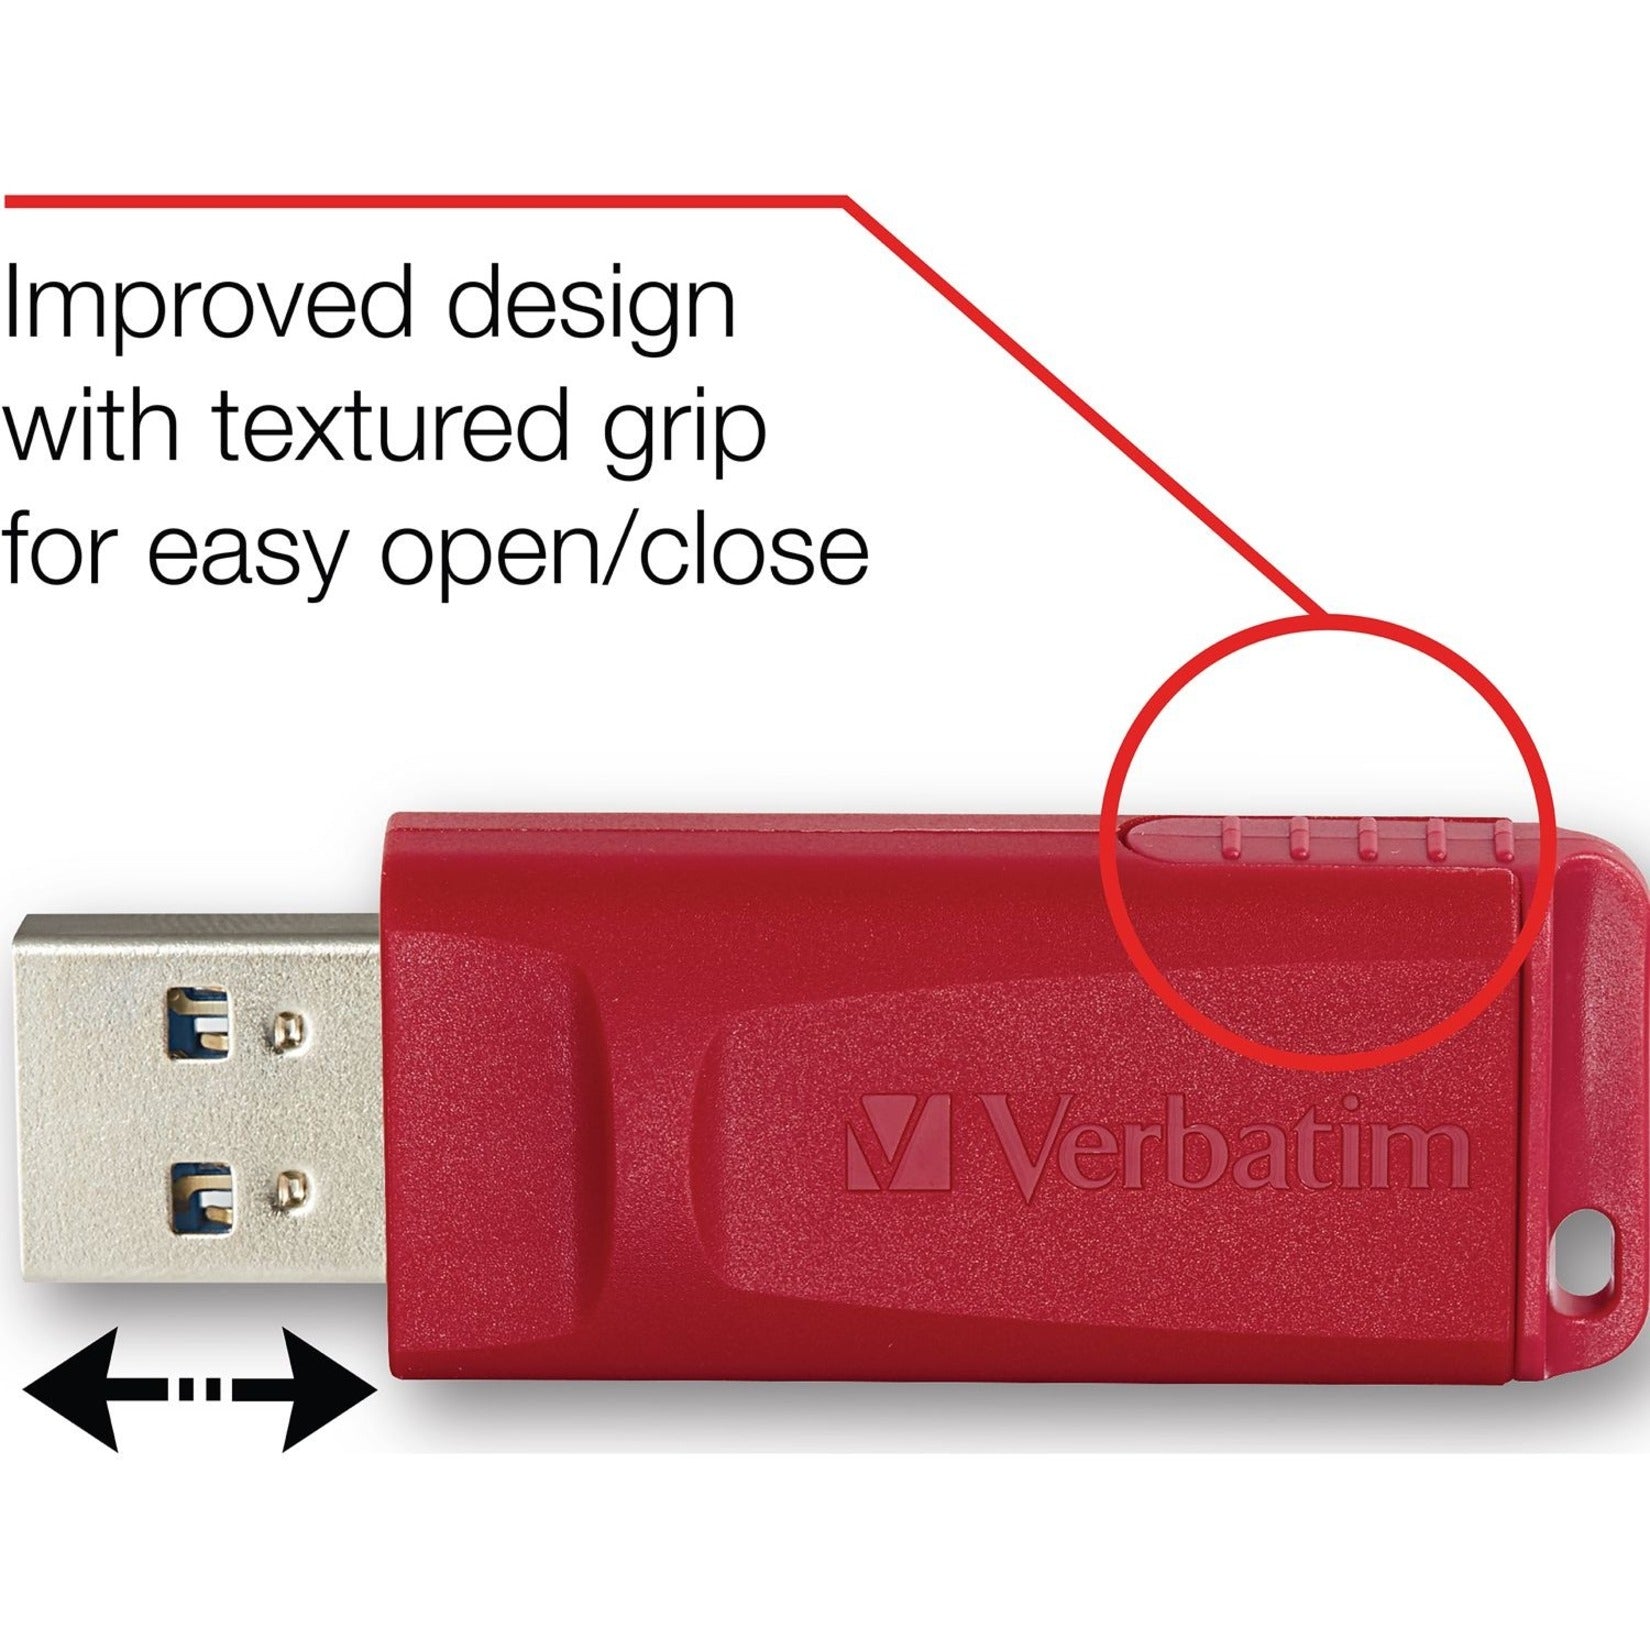 Microban 98703 Store 'n' Go 8GB USB Flash Drive 3pk, Red, Green, Blue